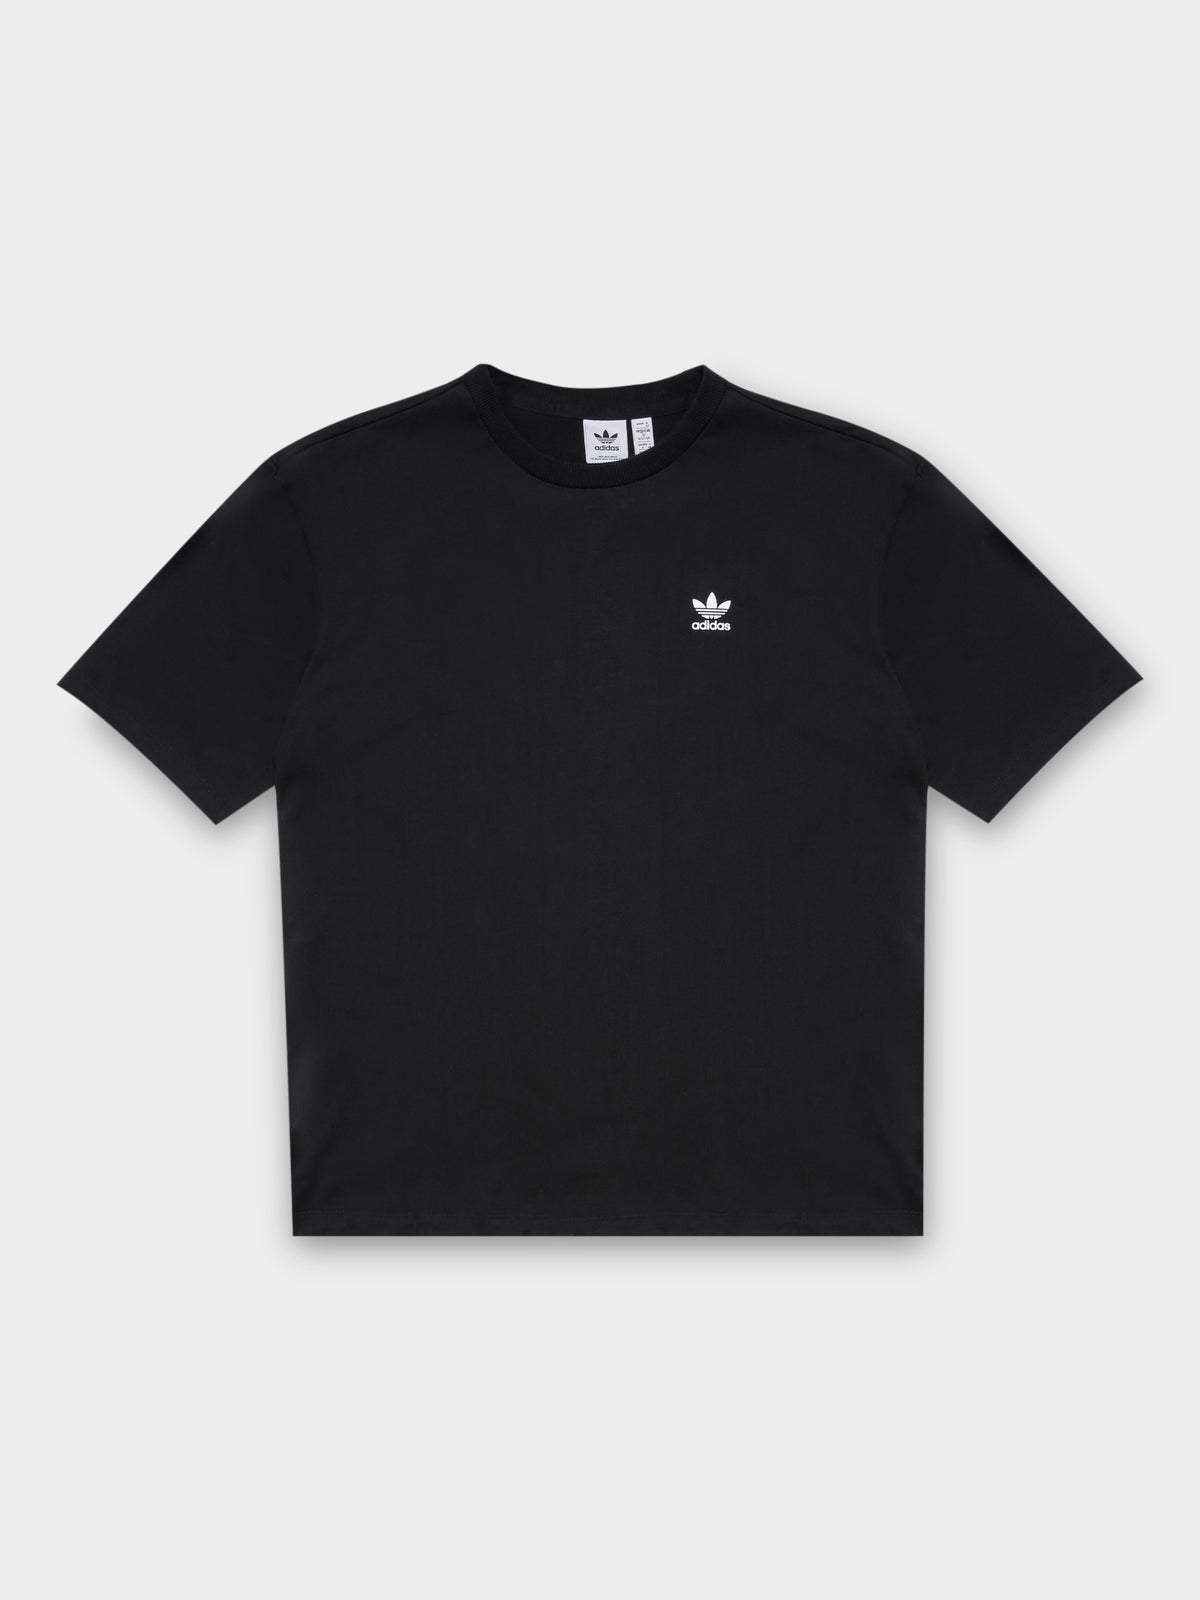 Always Original Loose Graphic T-Shirt in Black